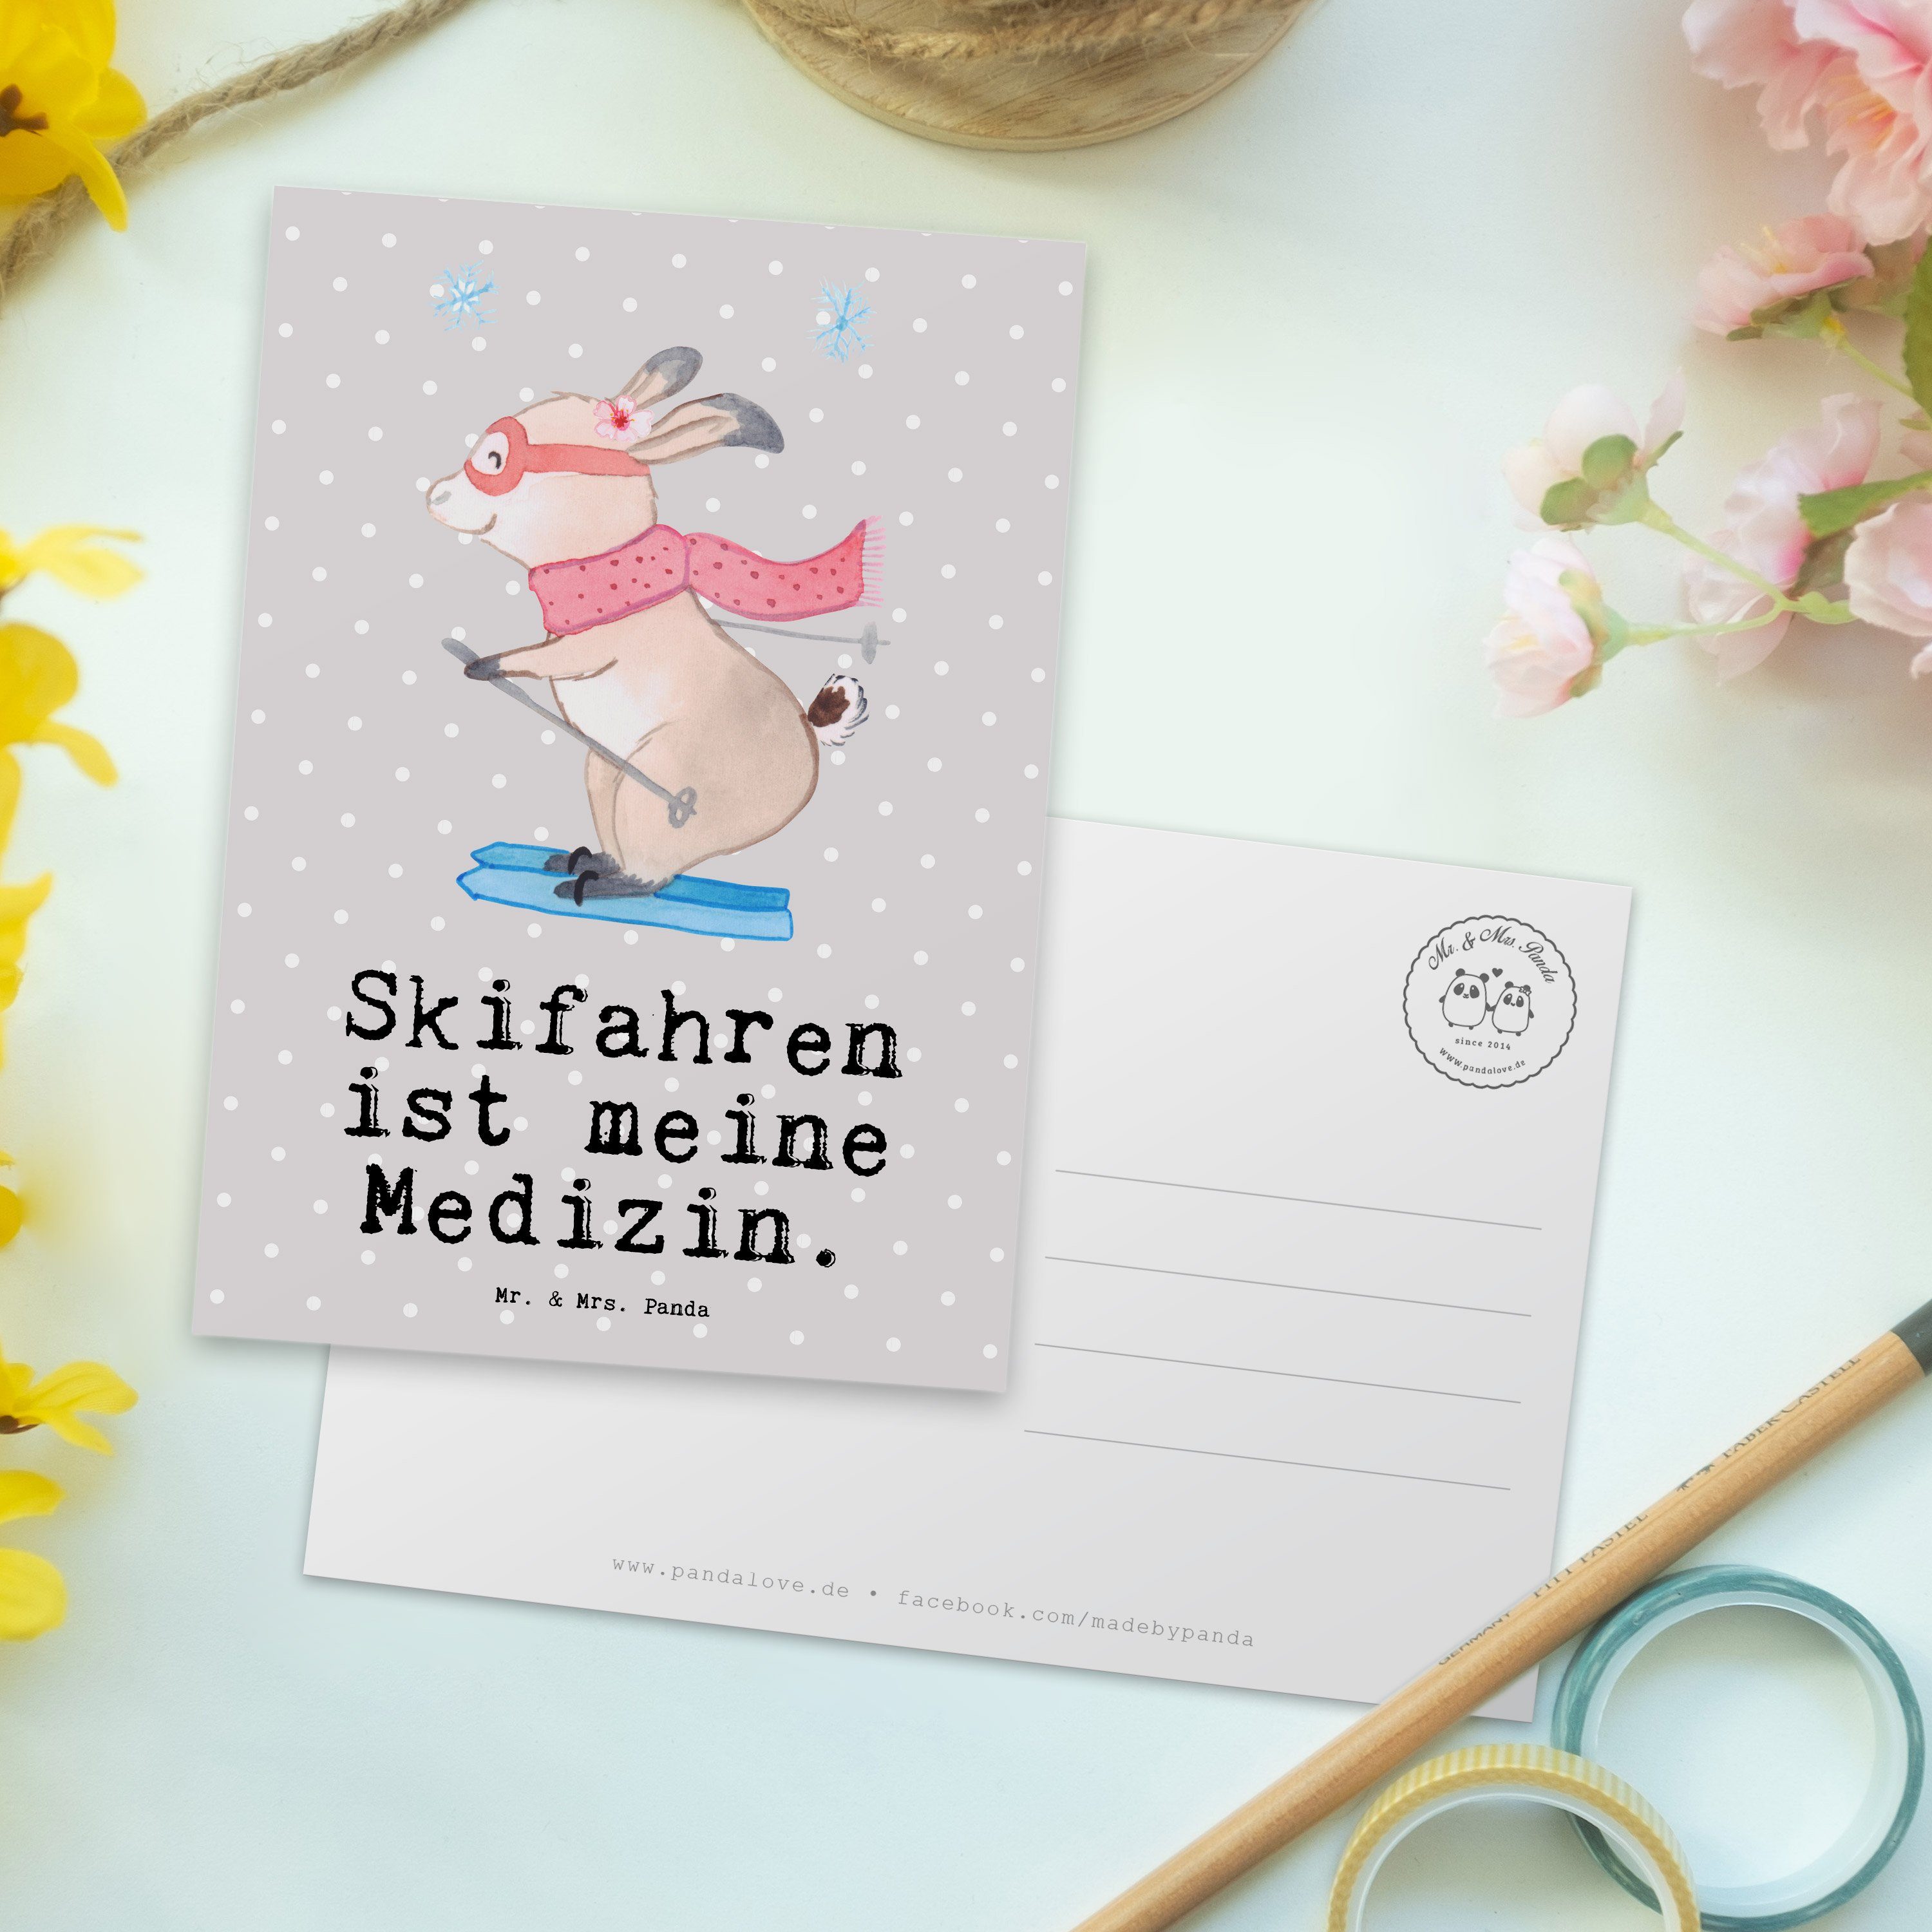 Mr. & Mrs. Panda Postkarte Bär Skifahren Medizin - Grau Pastell - Geschenk, Karte, Sport, Skiwet